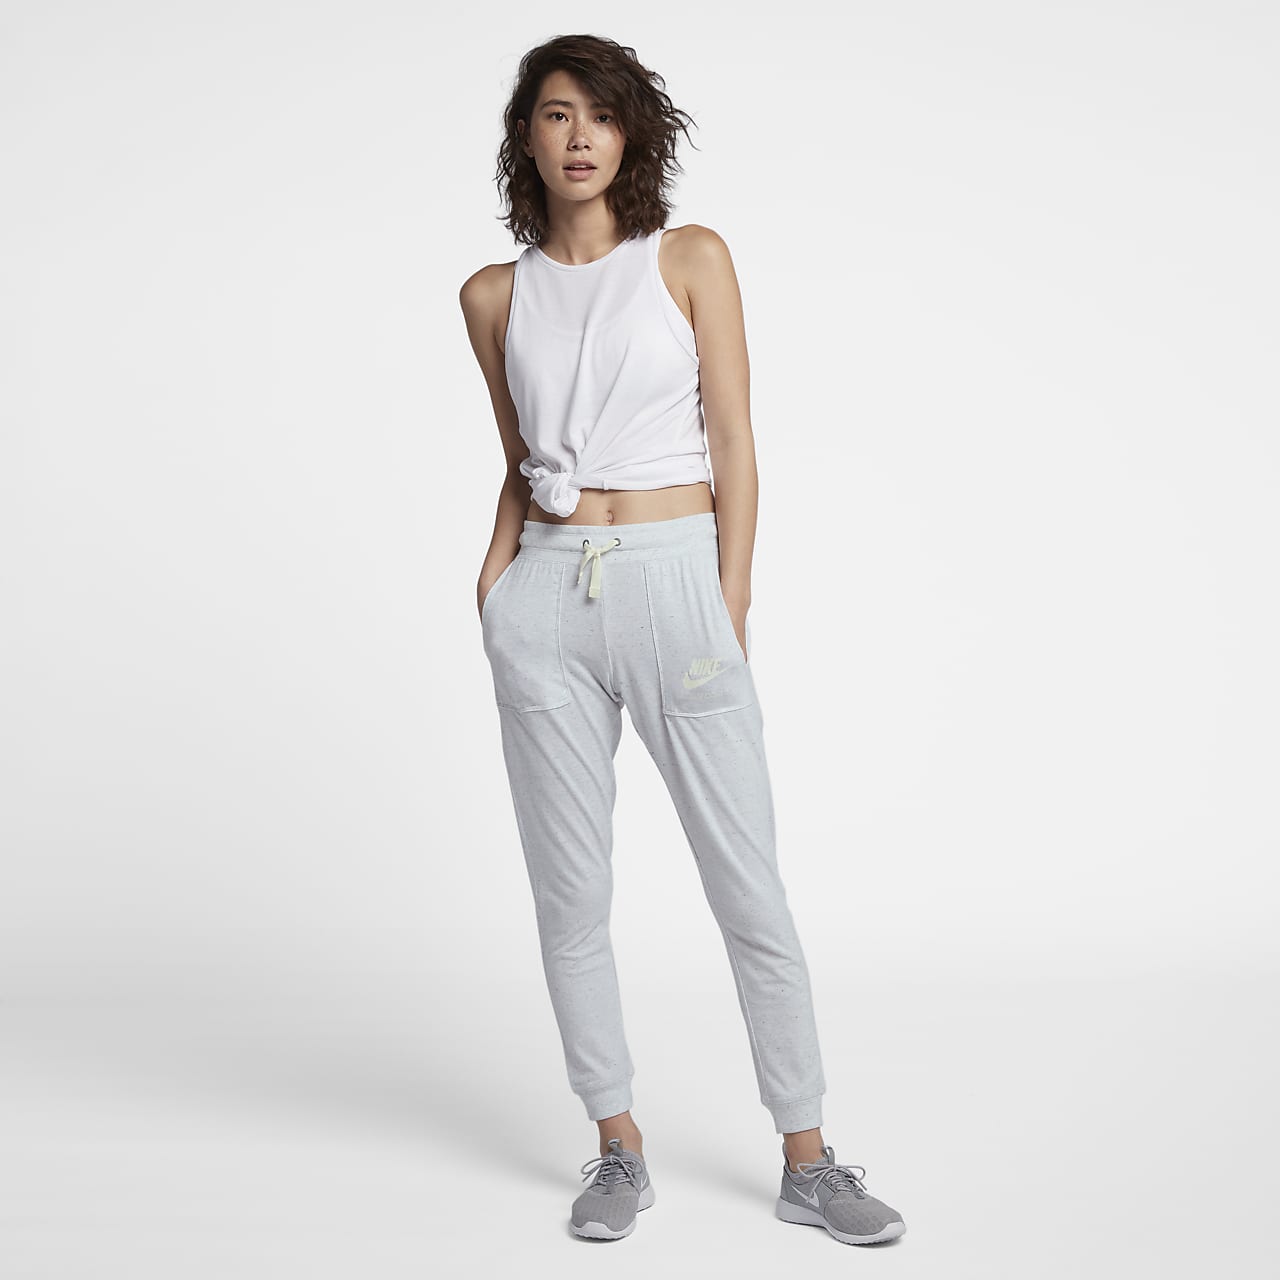 Nike Sportswear Gym Vintage Women's Capris Grey Size Medium